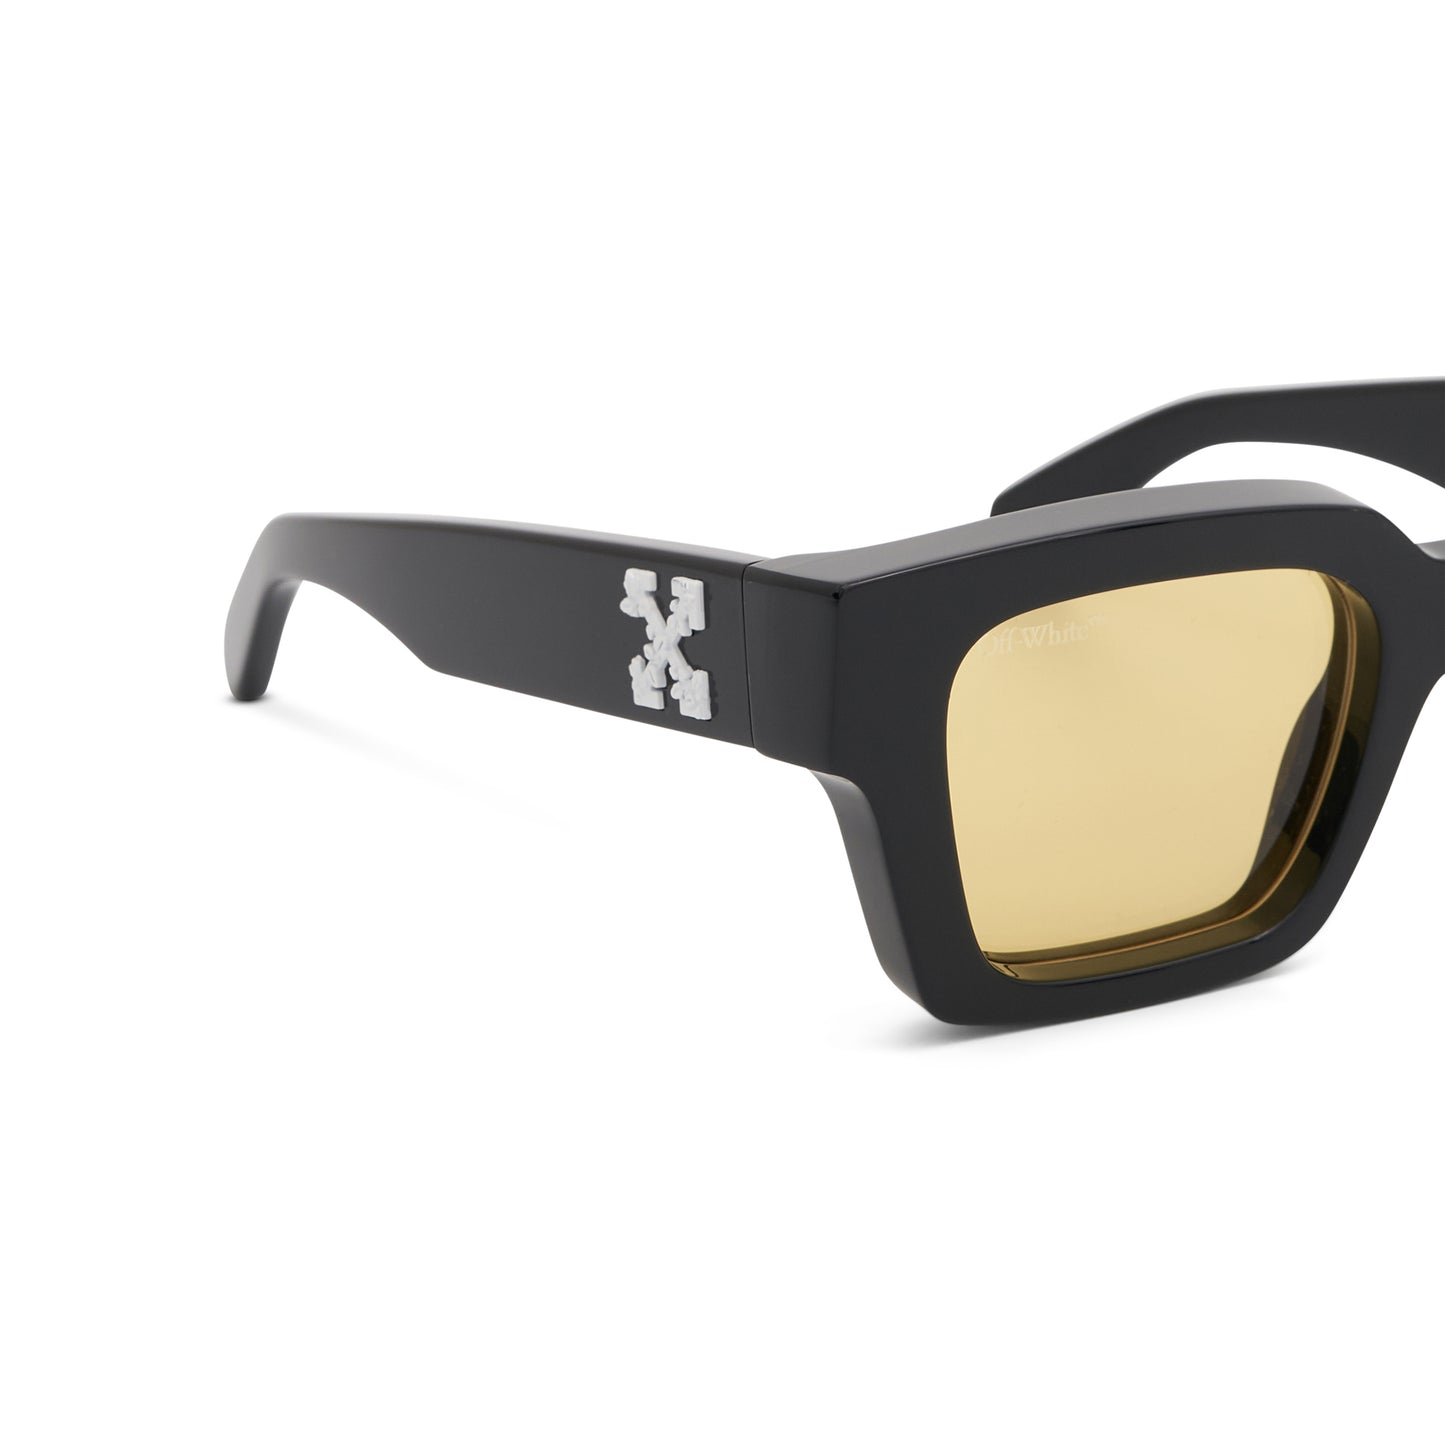 Virgil Square Frame Sunglasses in Black/Yellow